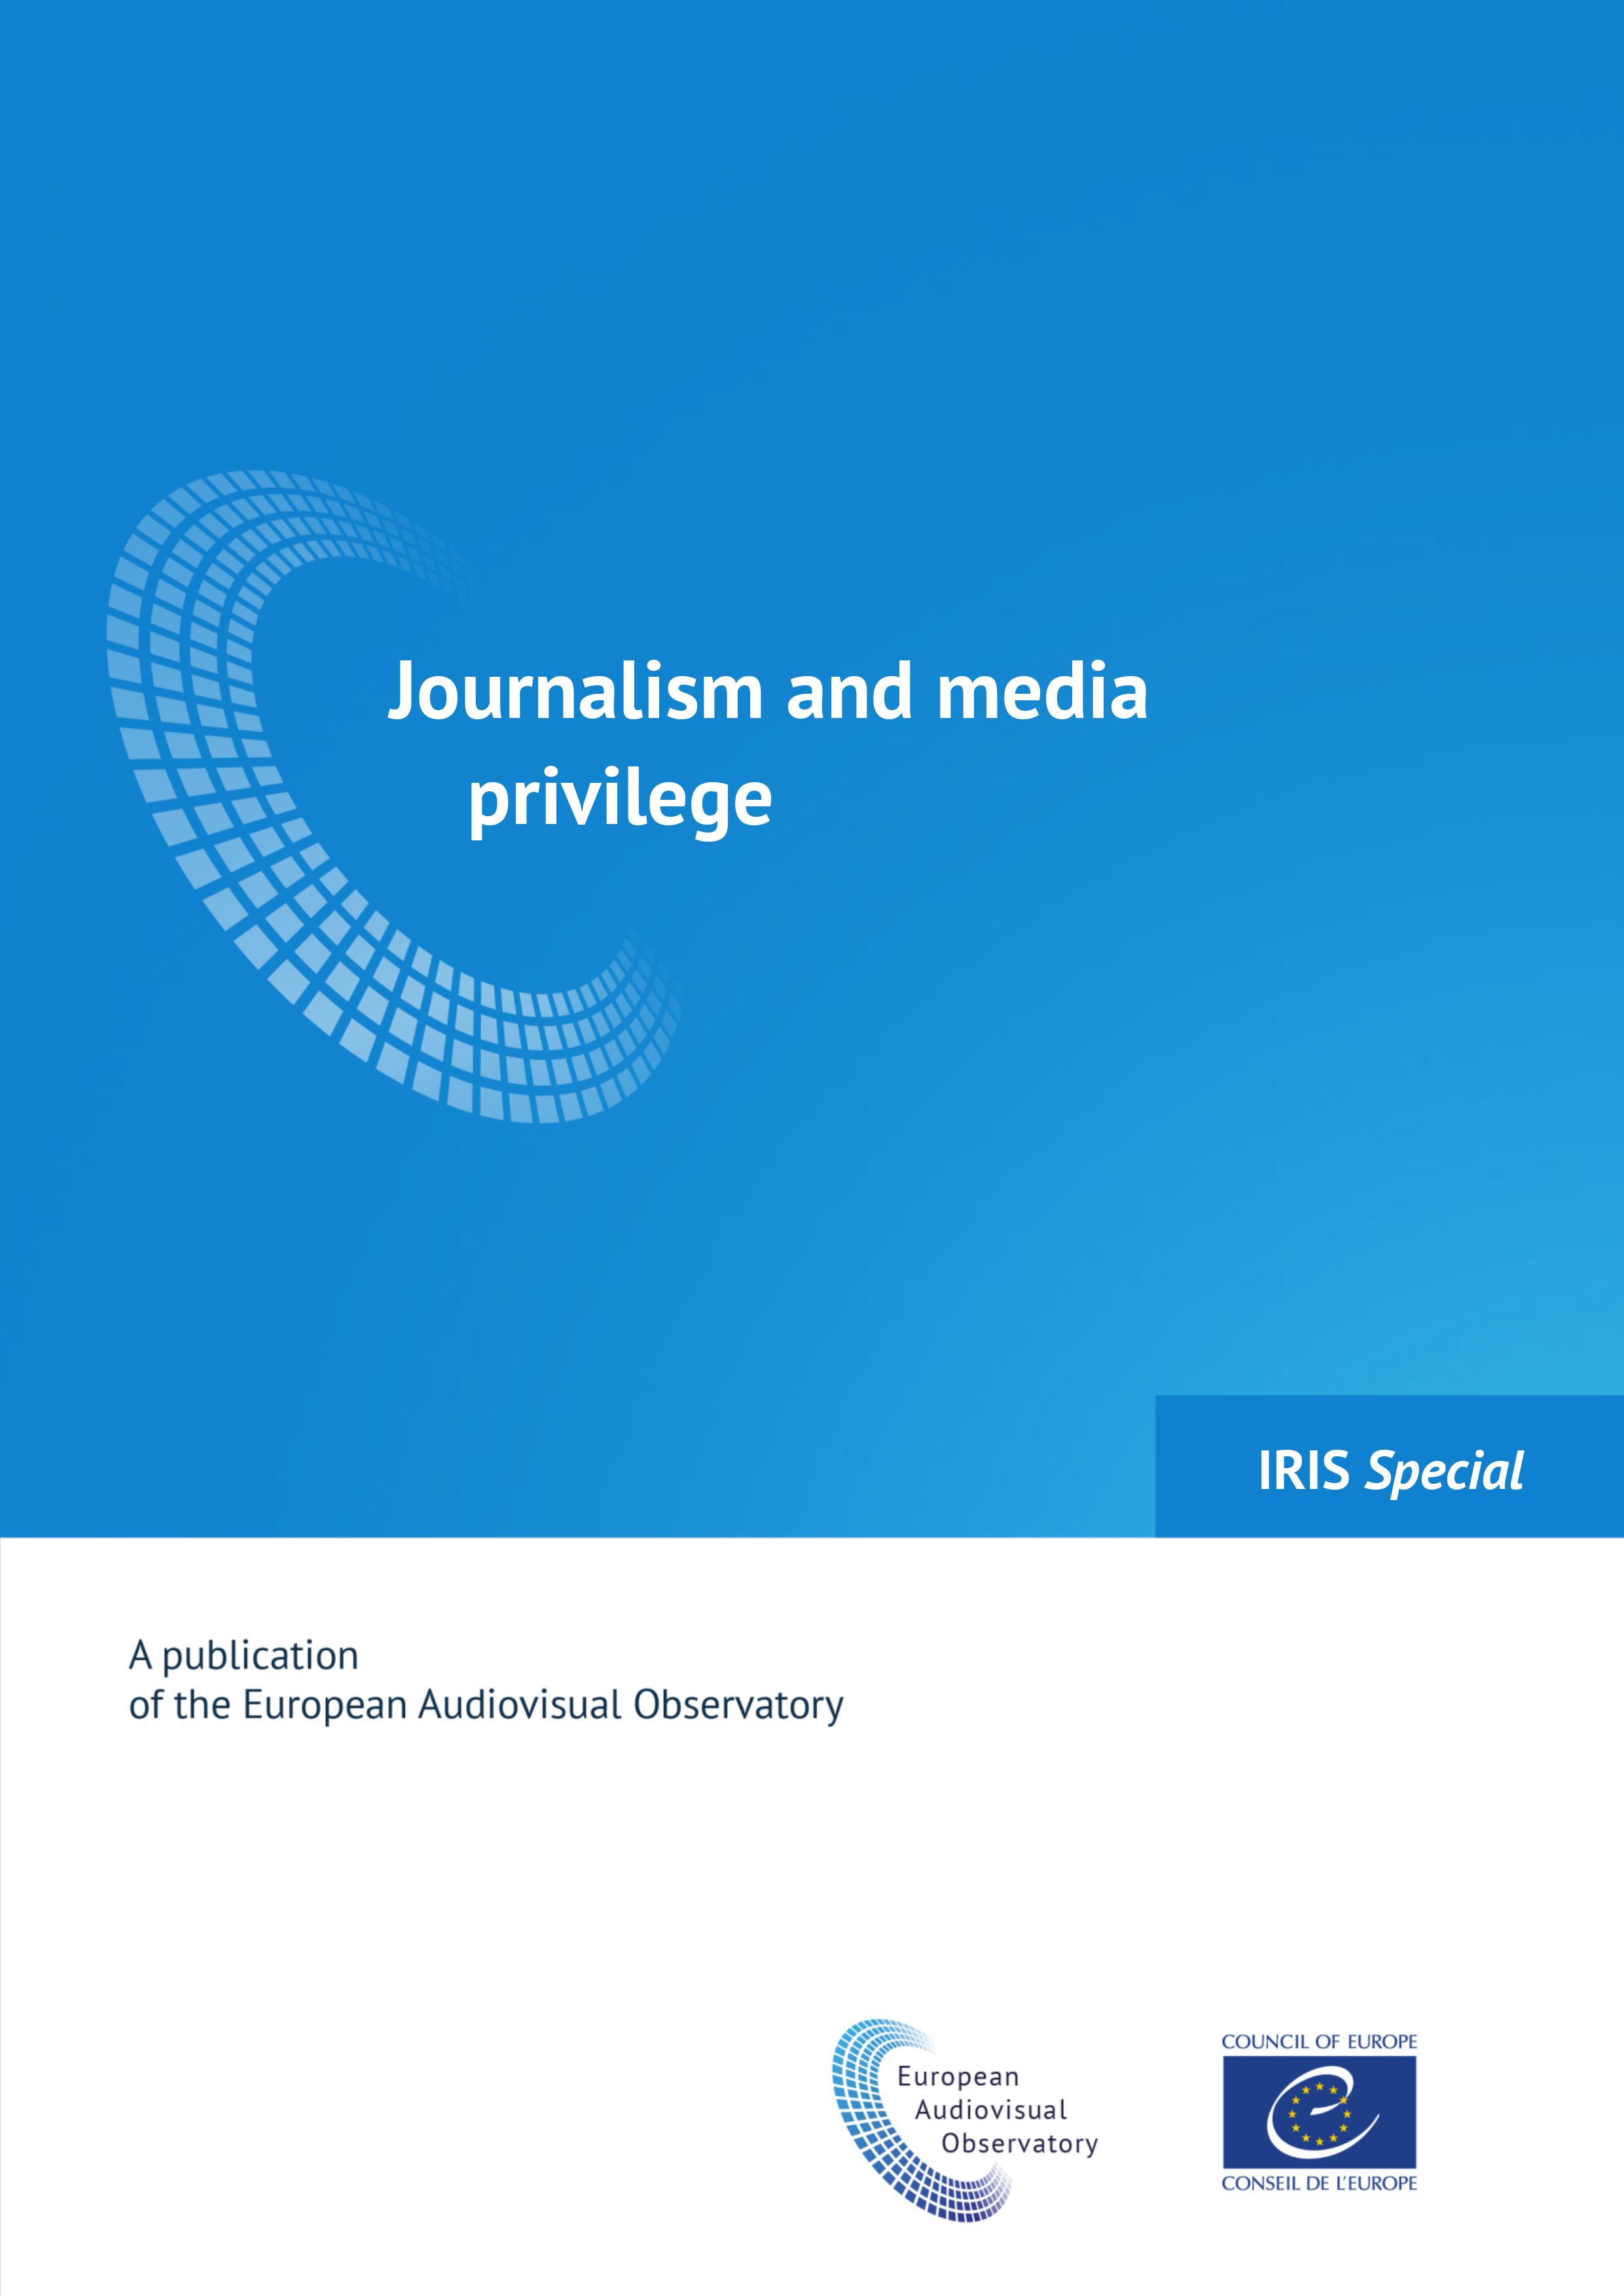 Journalism and media privilege (2017)